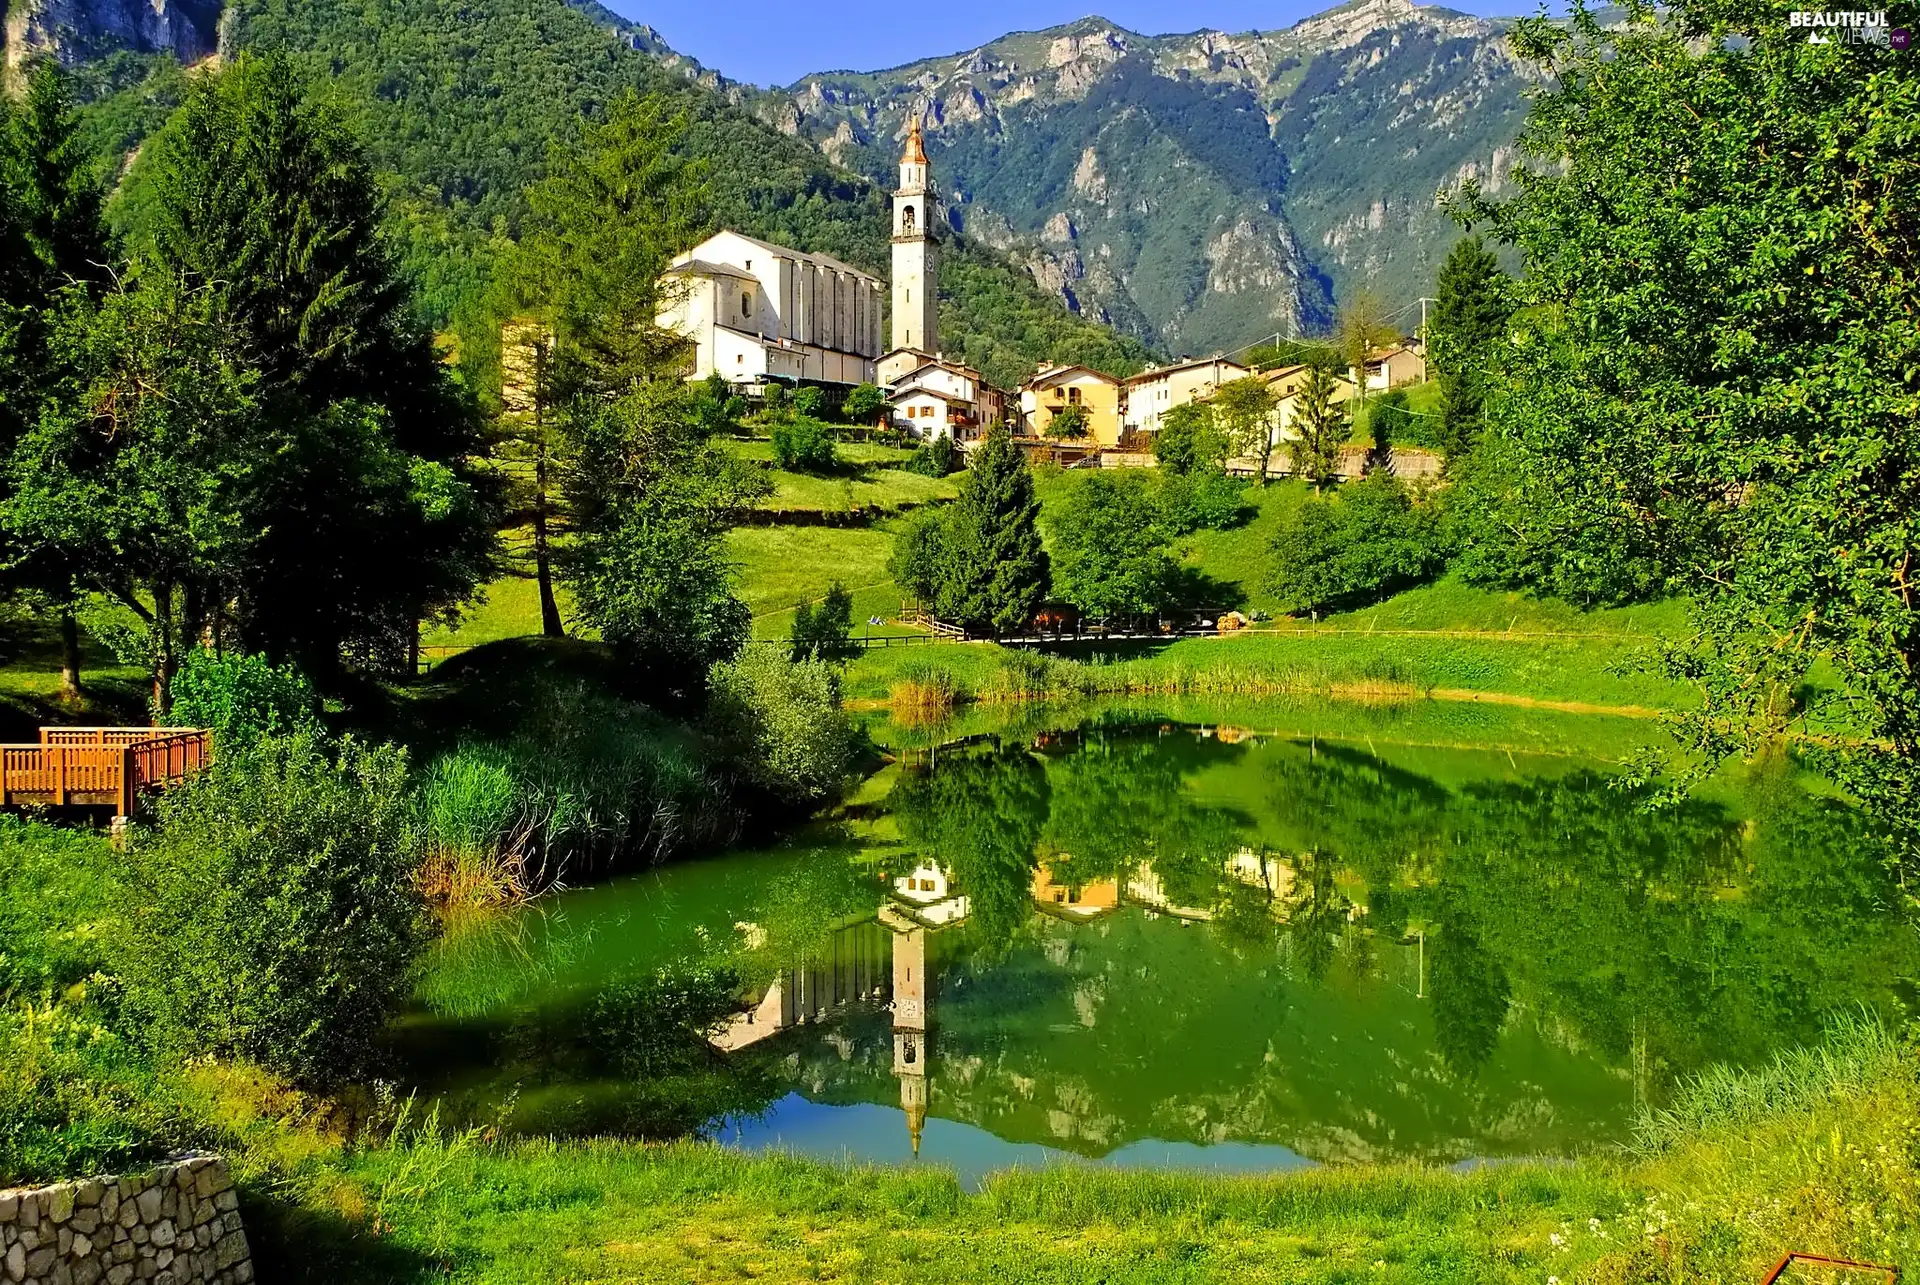 Pond - car, reflection, Church, Houses, Mountains